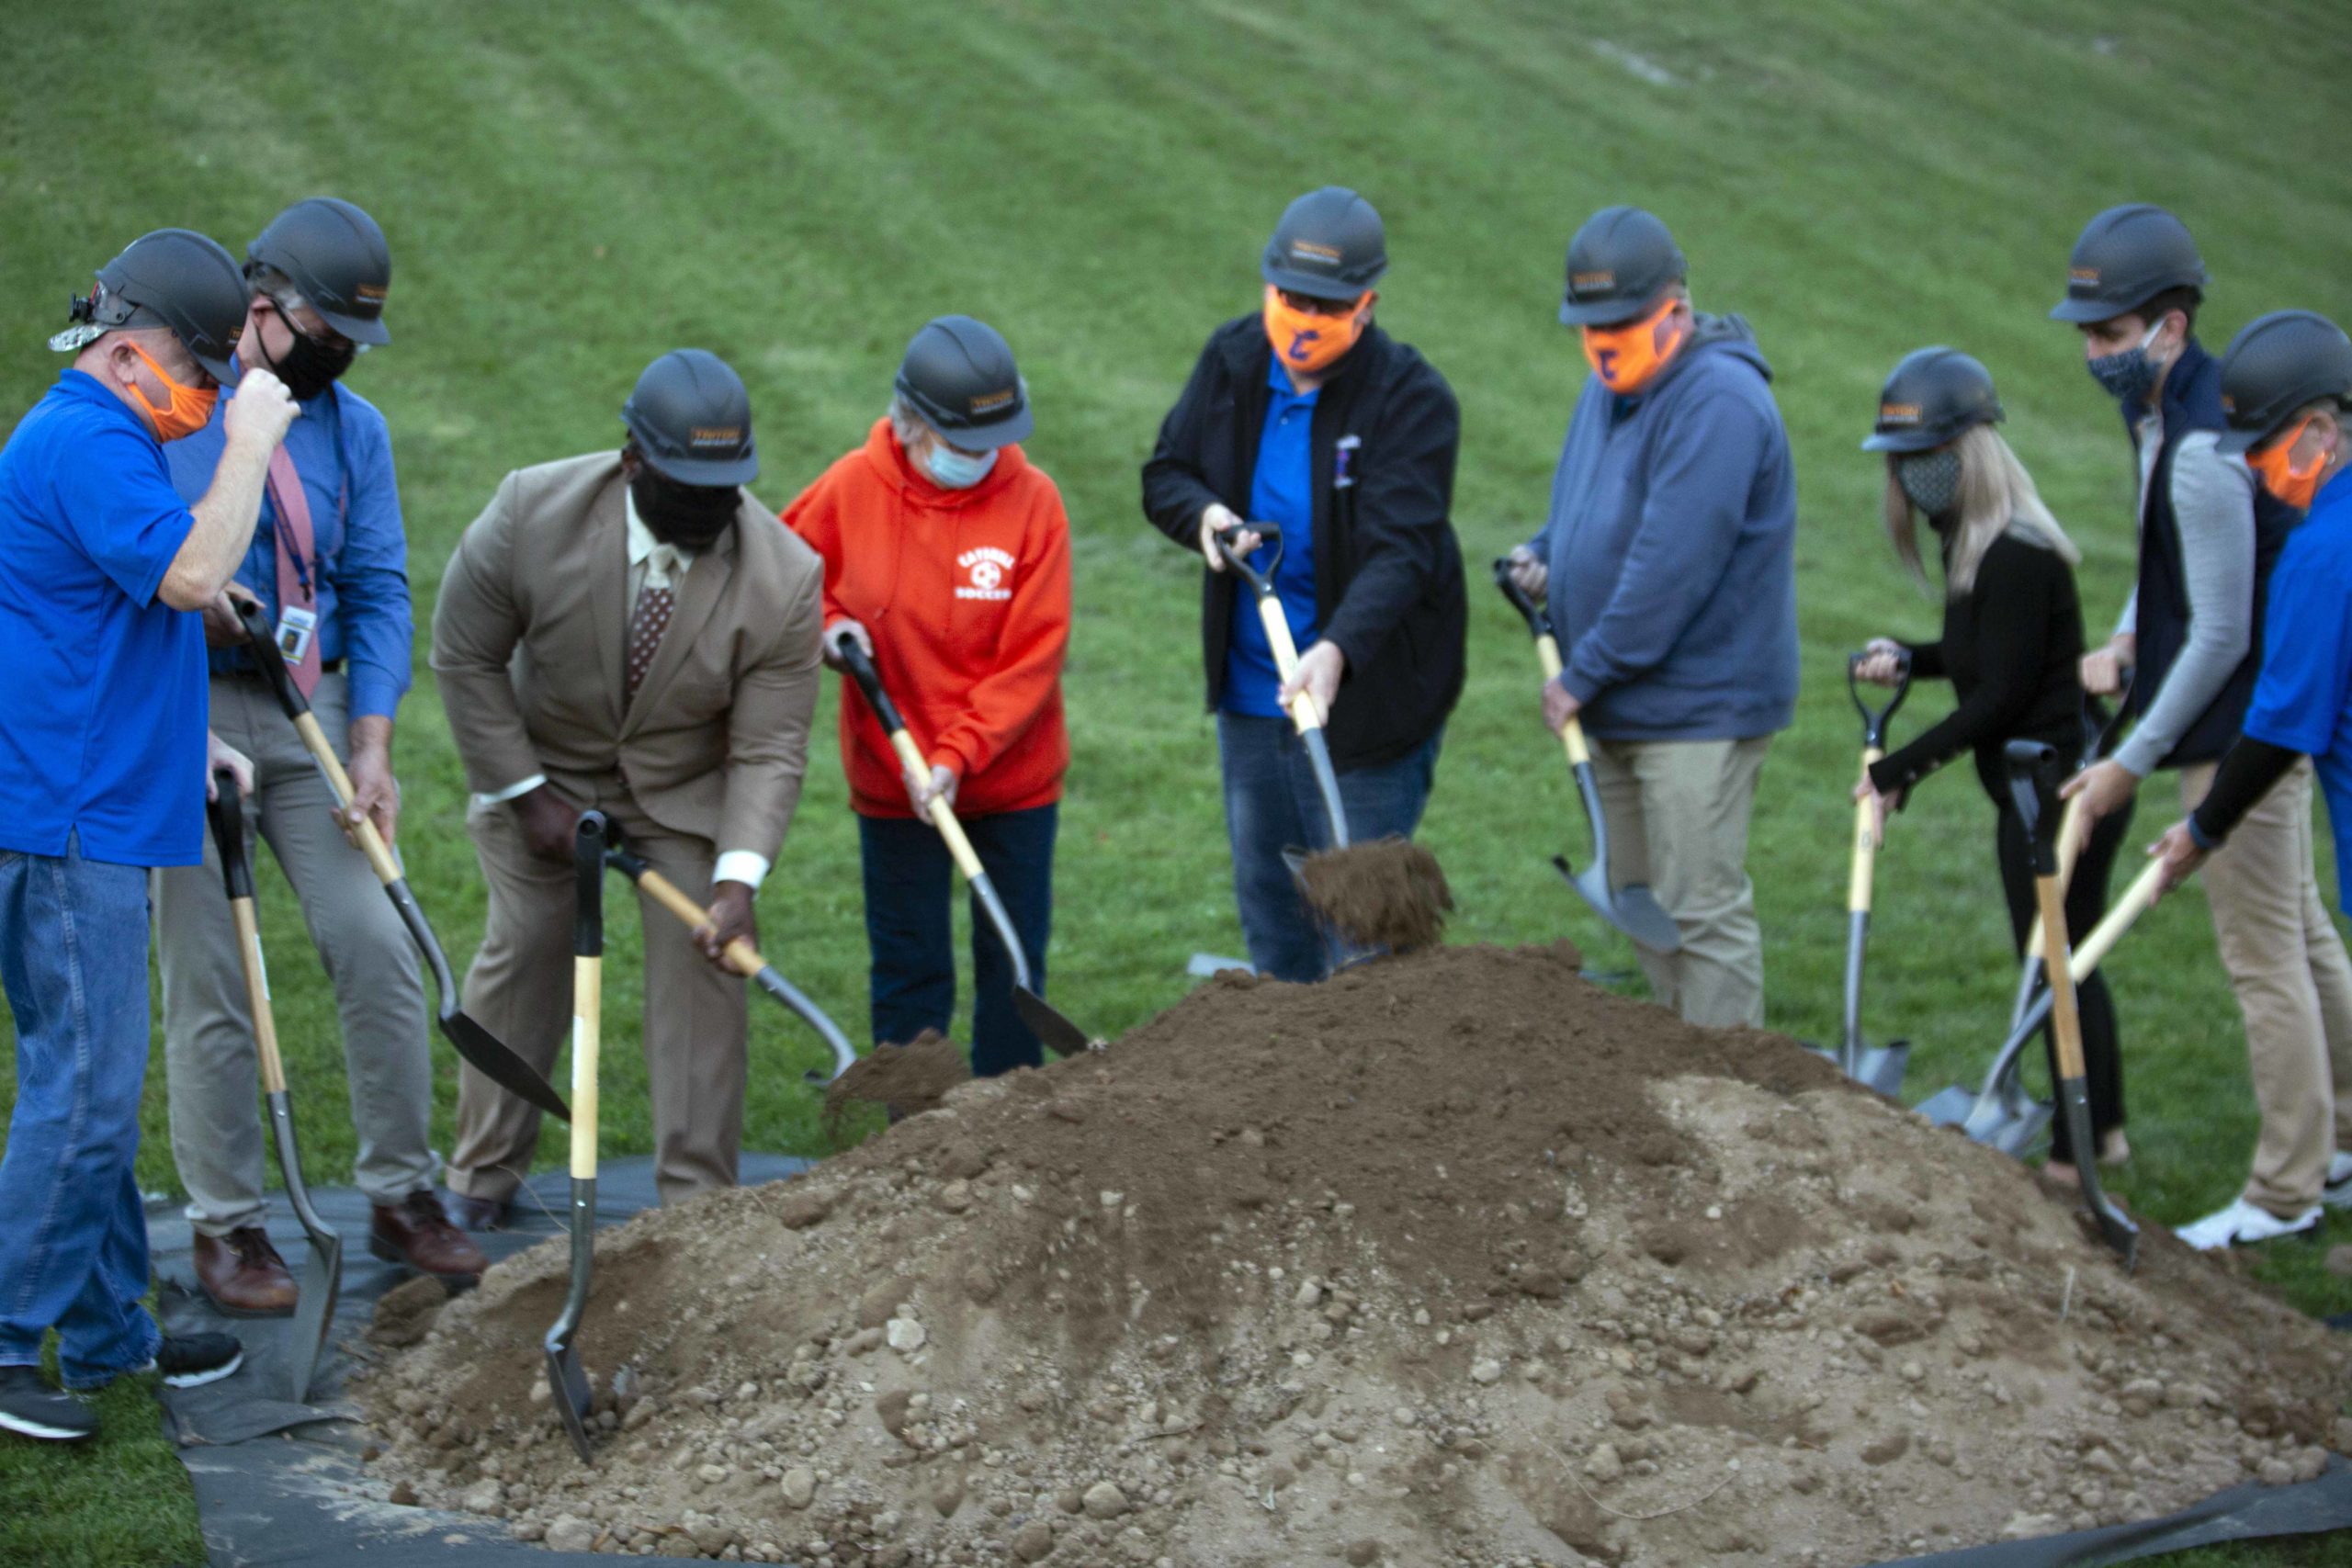 People wearing masks and hardhats shoveling dirt pile